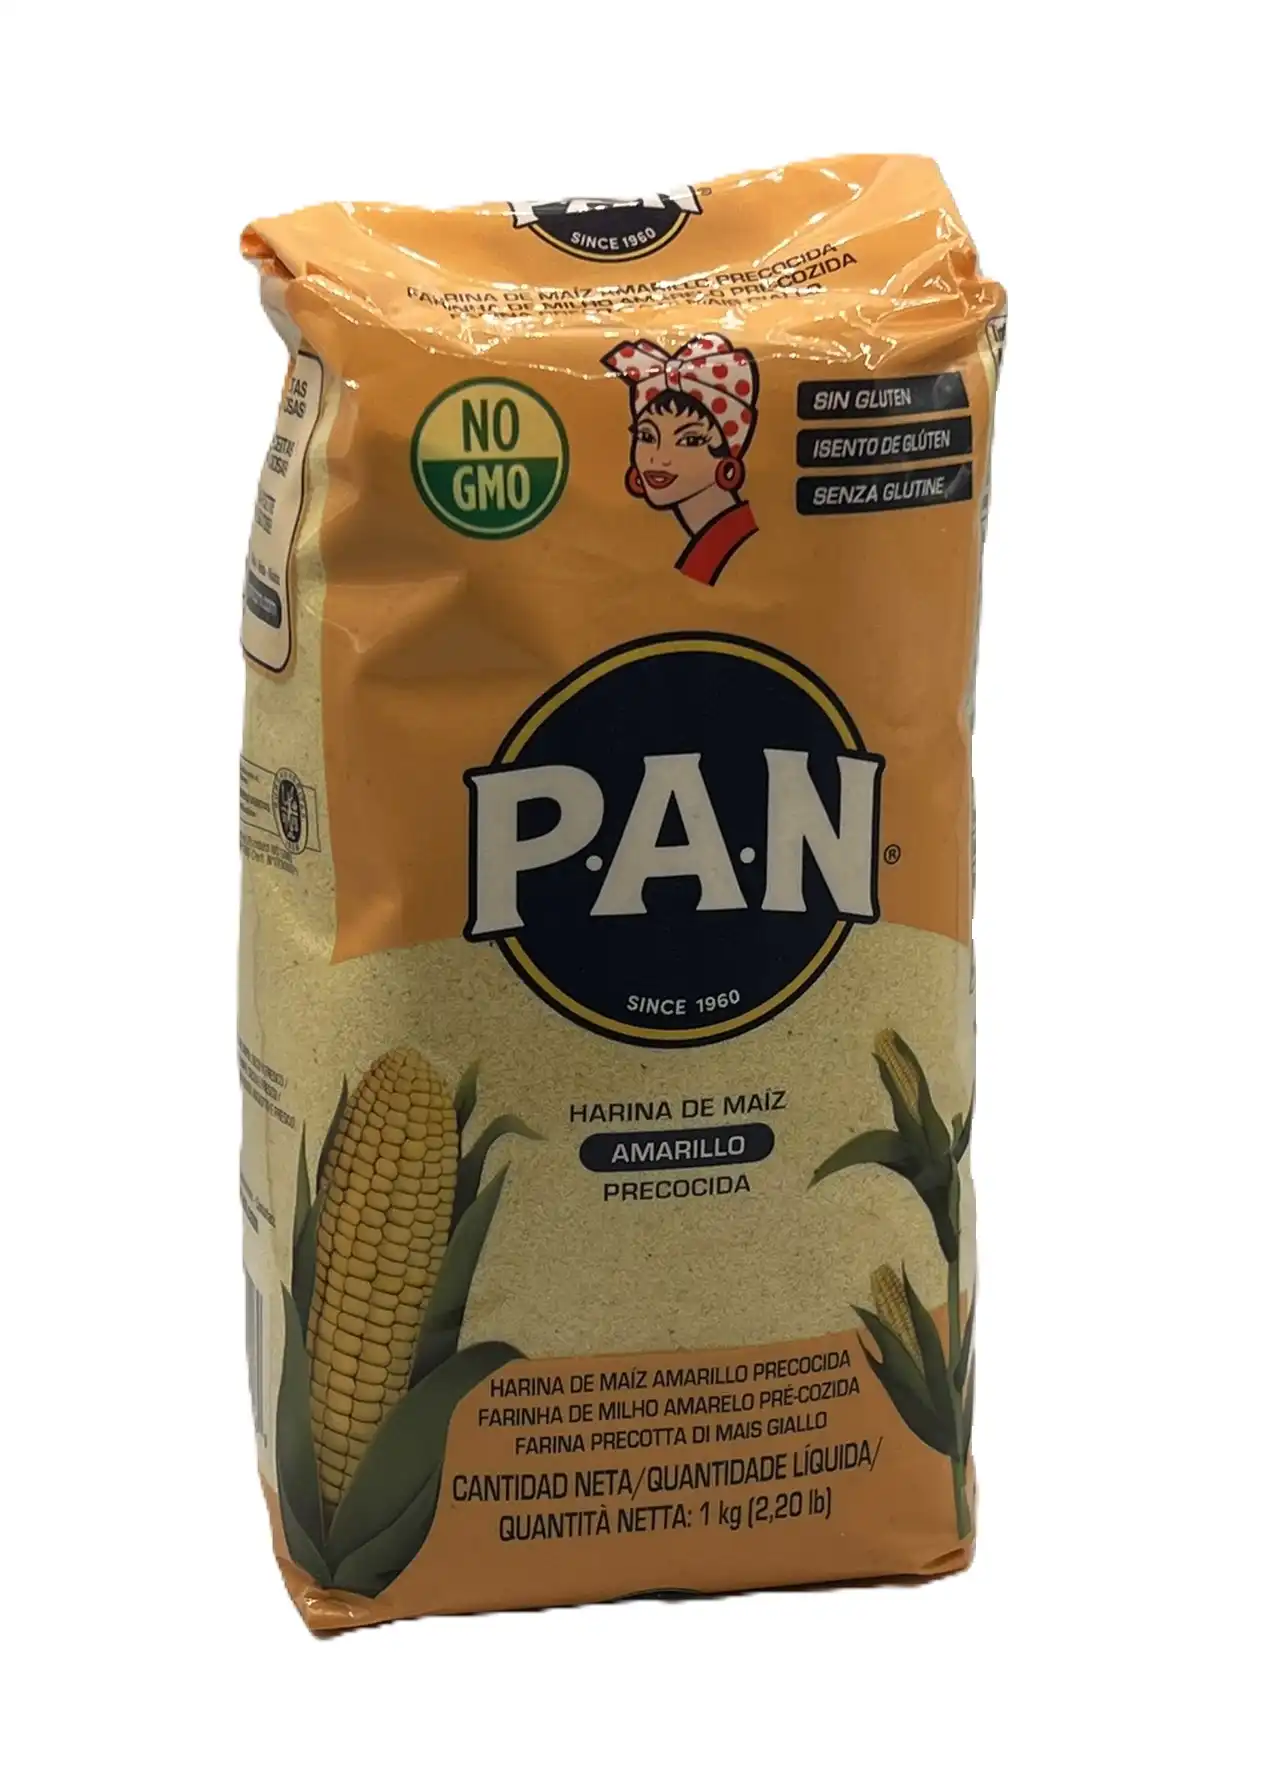 Amarillo (yellow maize flour) - P.A.N